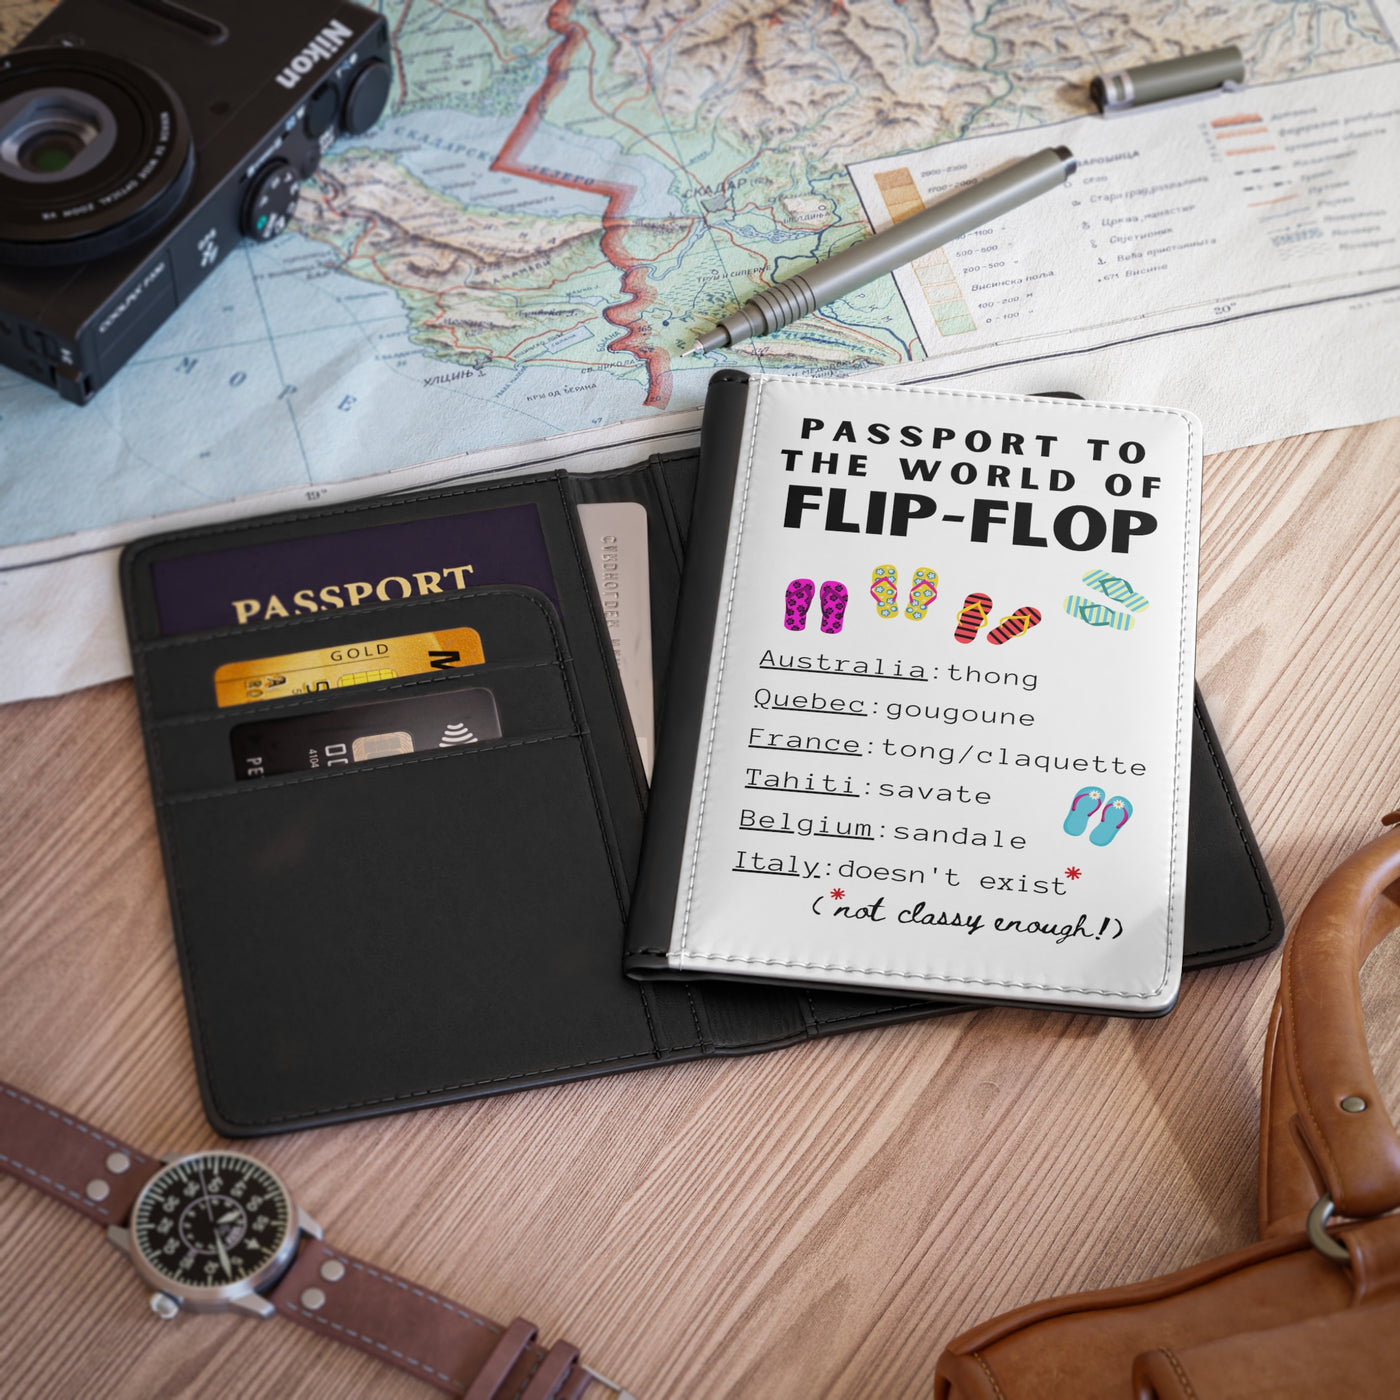 PASSPORT TO THE WORLD OF FLIP-FLOP White Passport Cover